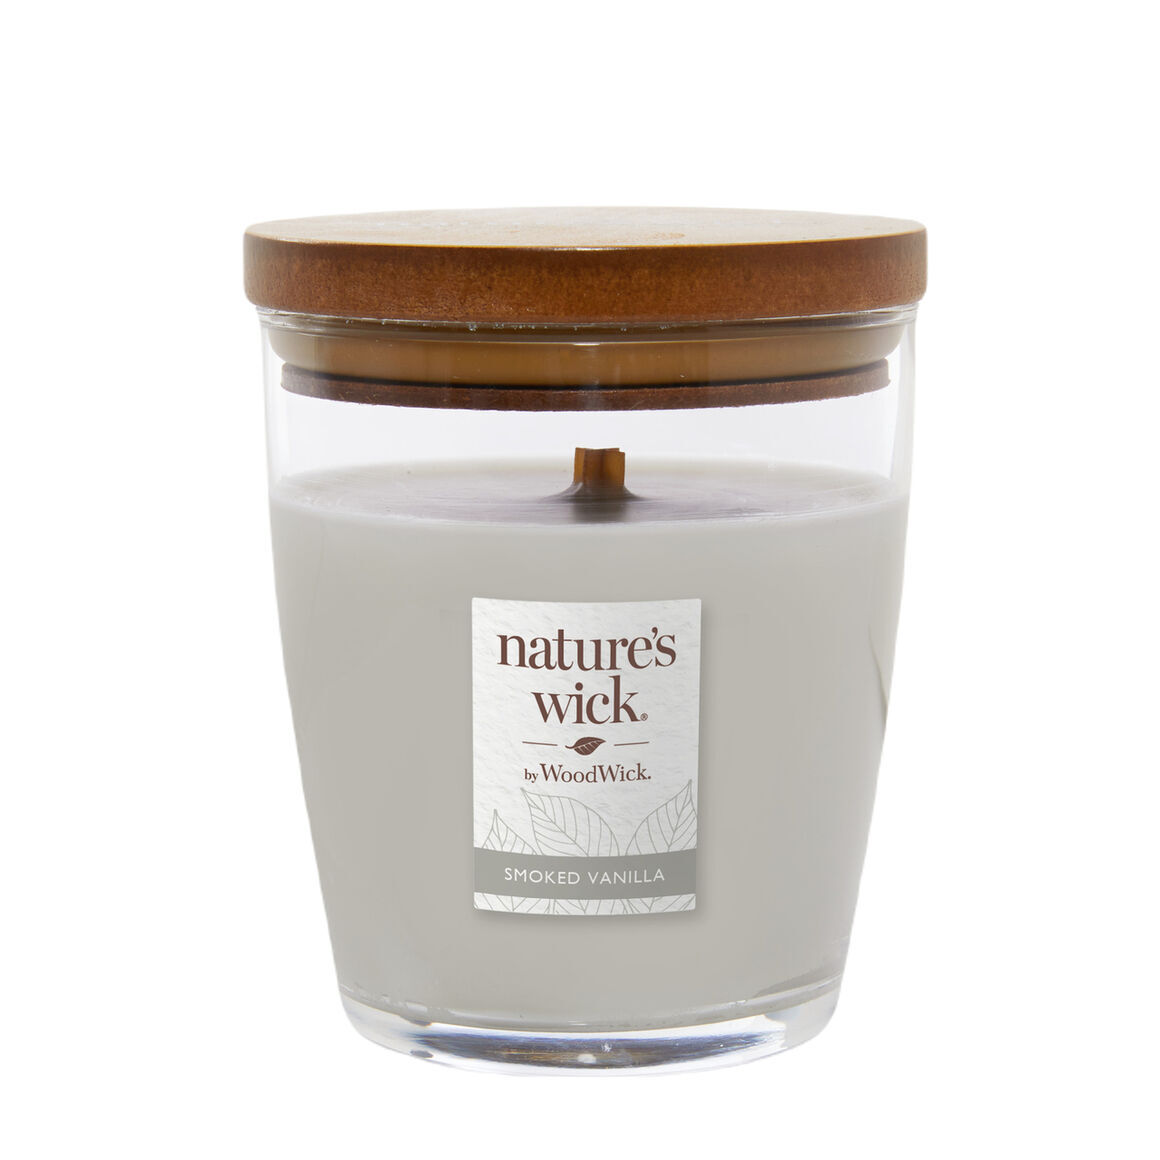 Nature's Wick By WoodWick Smoked Vanilla Ароматическая свеча копченая ваниль, 284 г ароматическая свеча woodwick smoked vanilla 1 шт